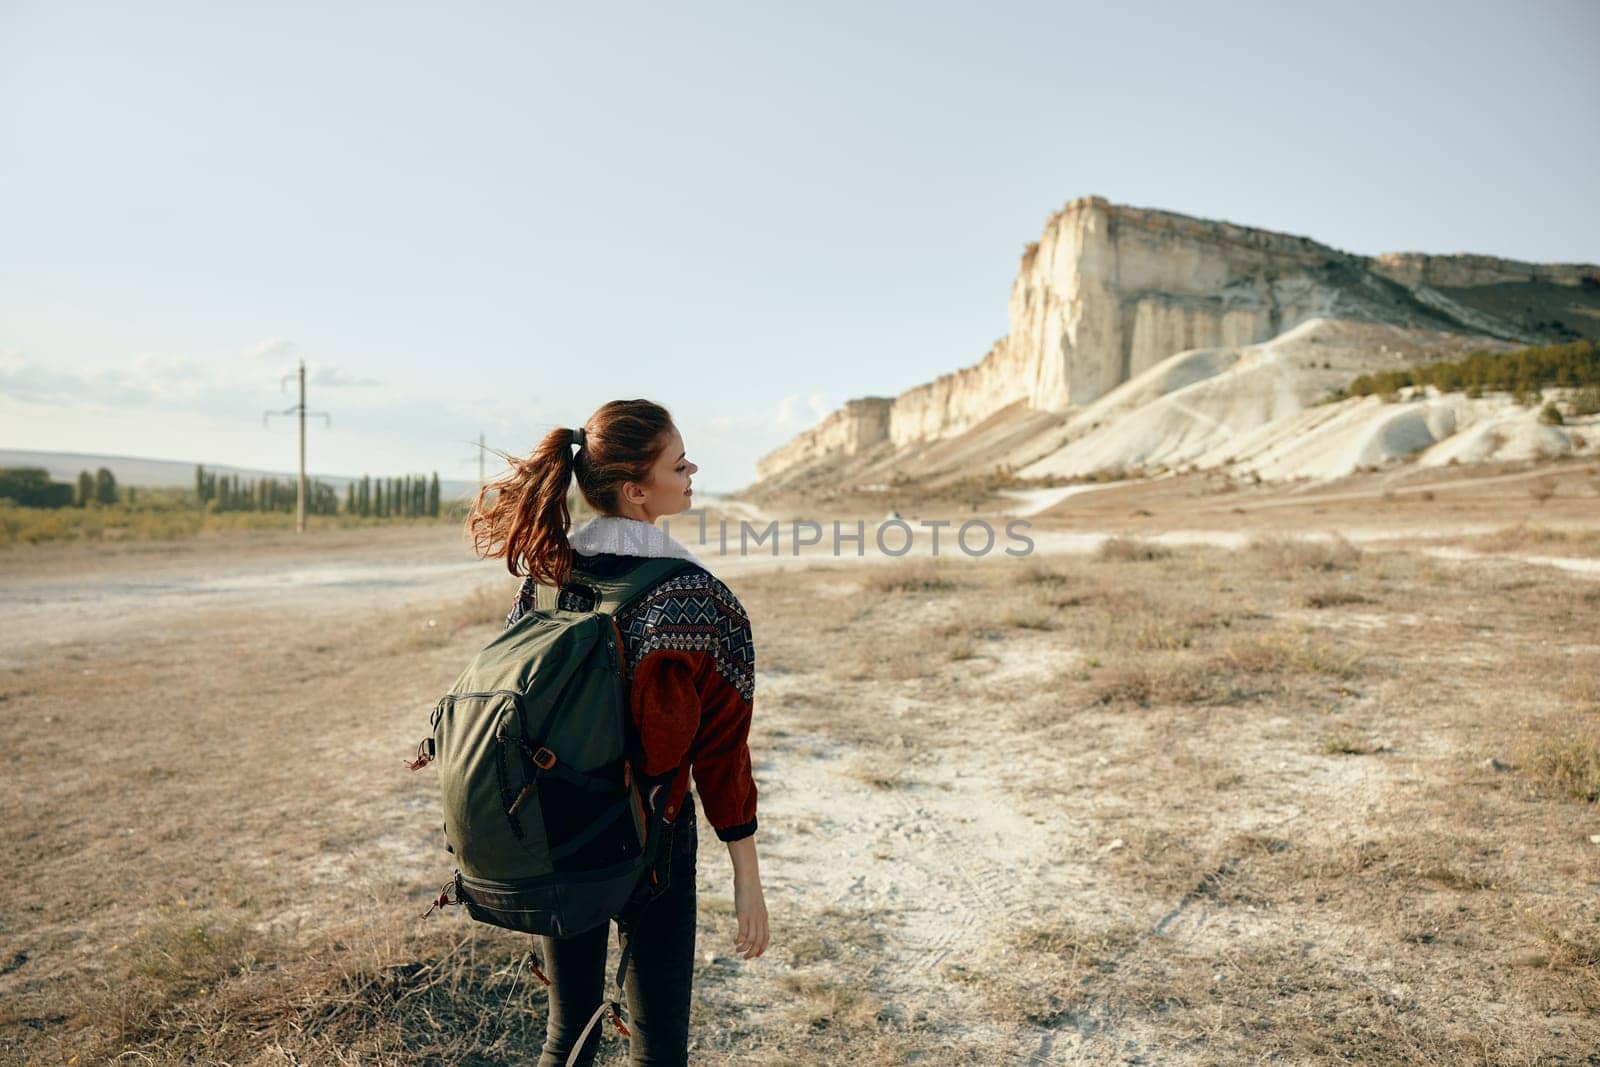 Solitary hiker in desert landscape gazing at majestic mountain peak on the horizon